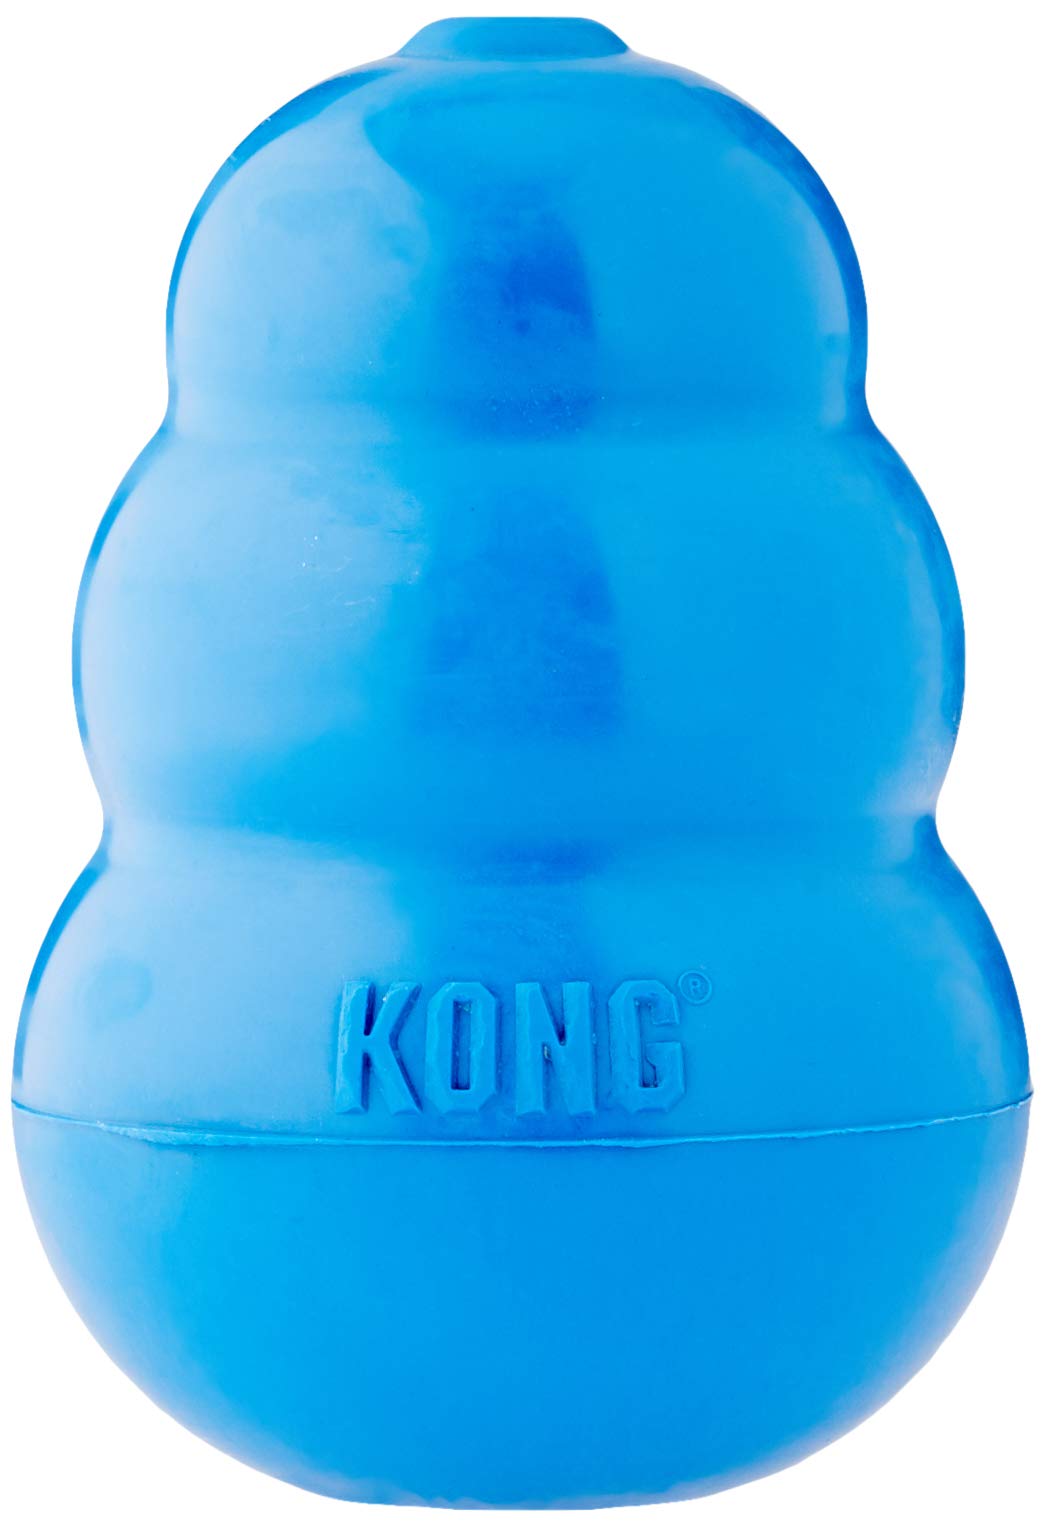 Kong Lizenz KC840 20 Spielzeug, Blau, Größe XL